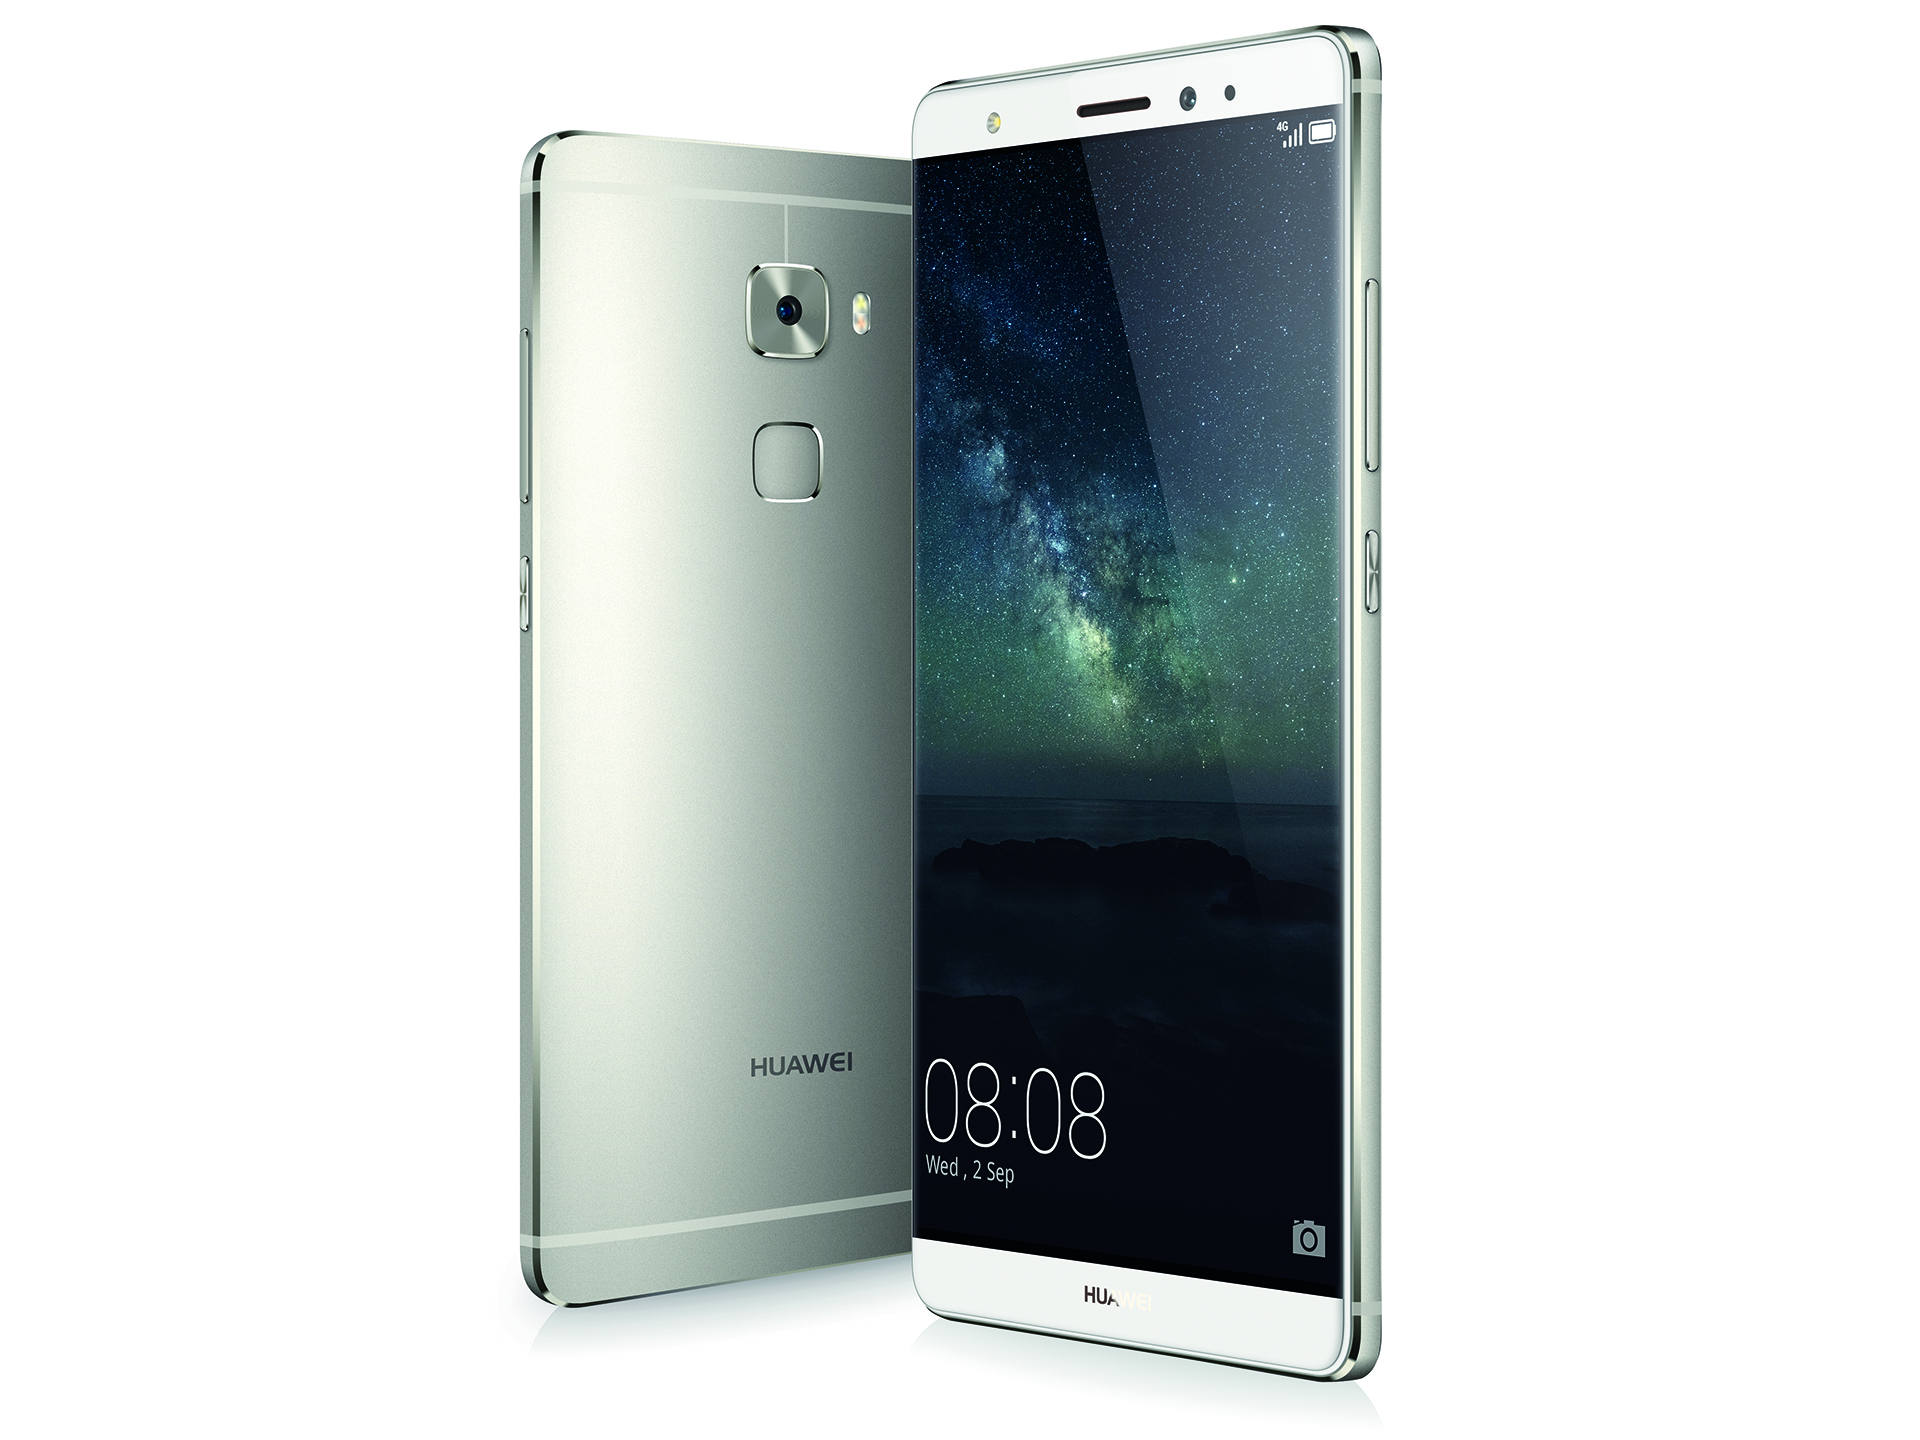 Huawei Mate S Review - Reviews